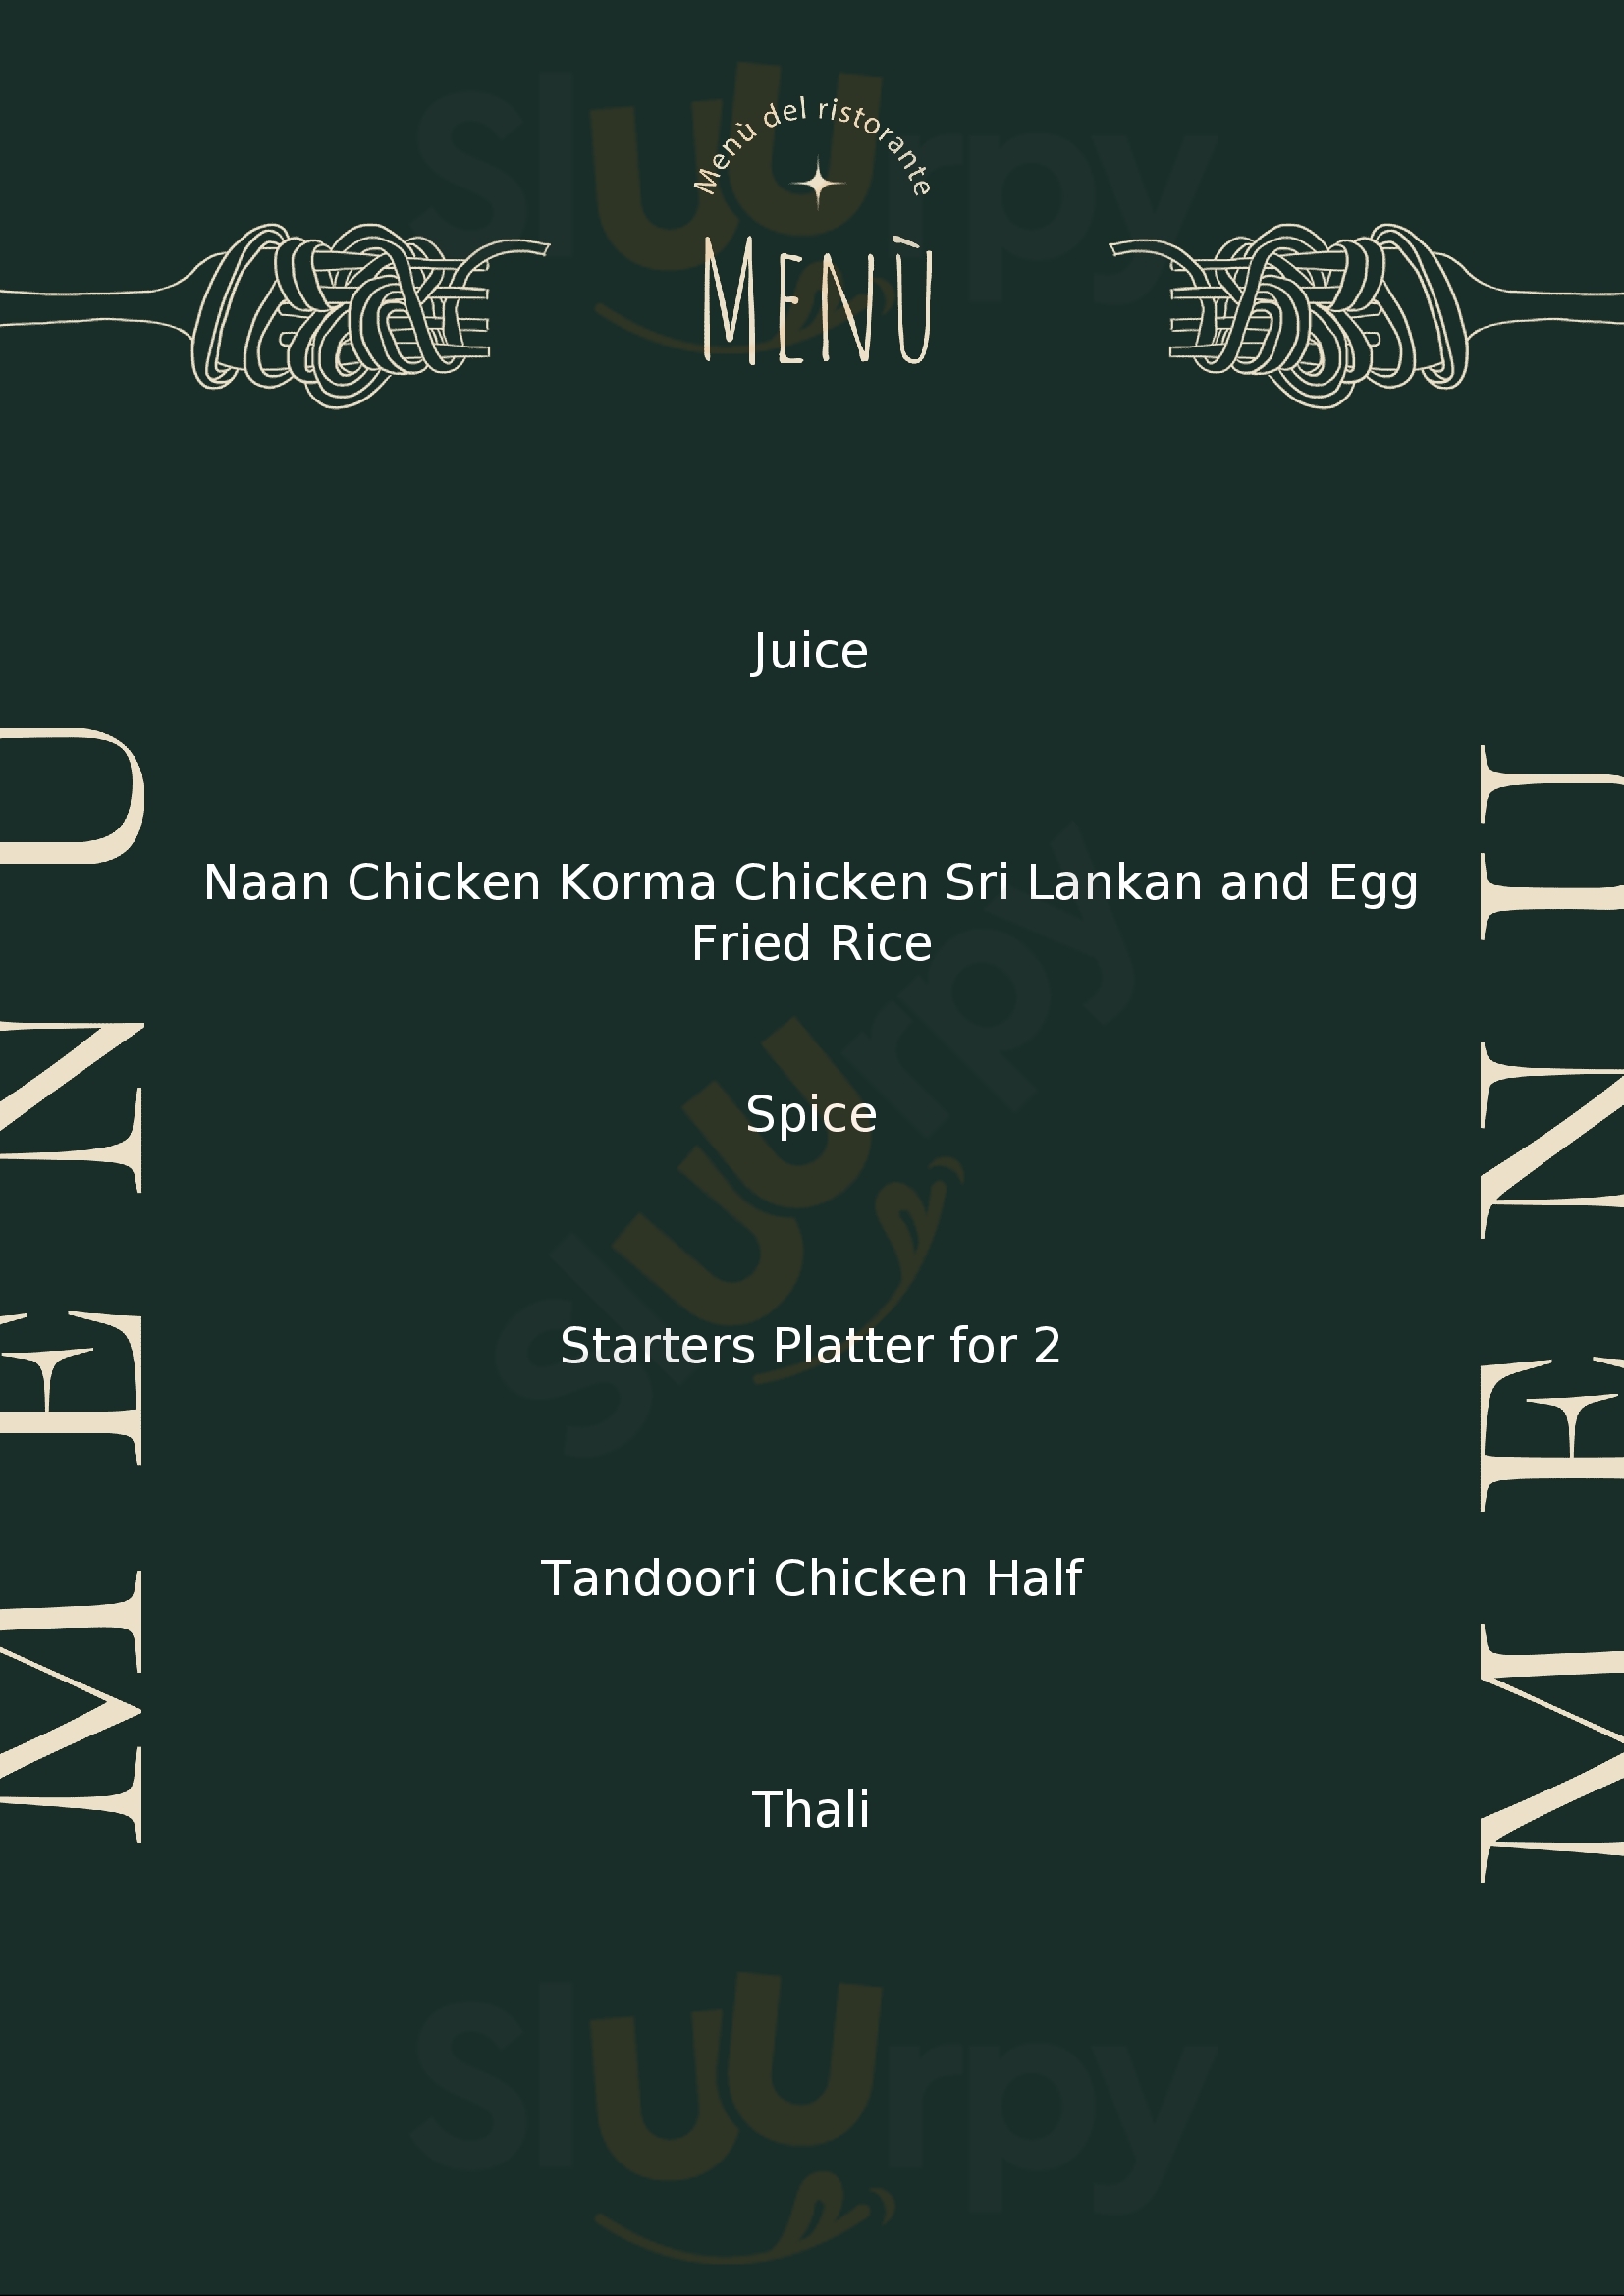 Curry Leaf Indian Restaurant Bispham Menu - 1